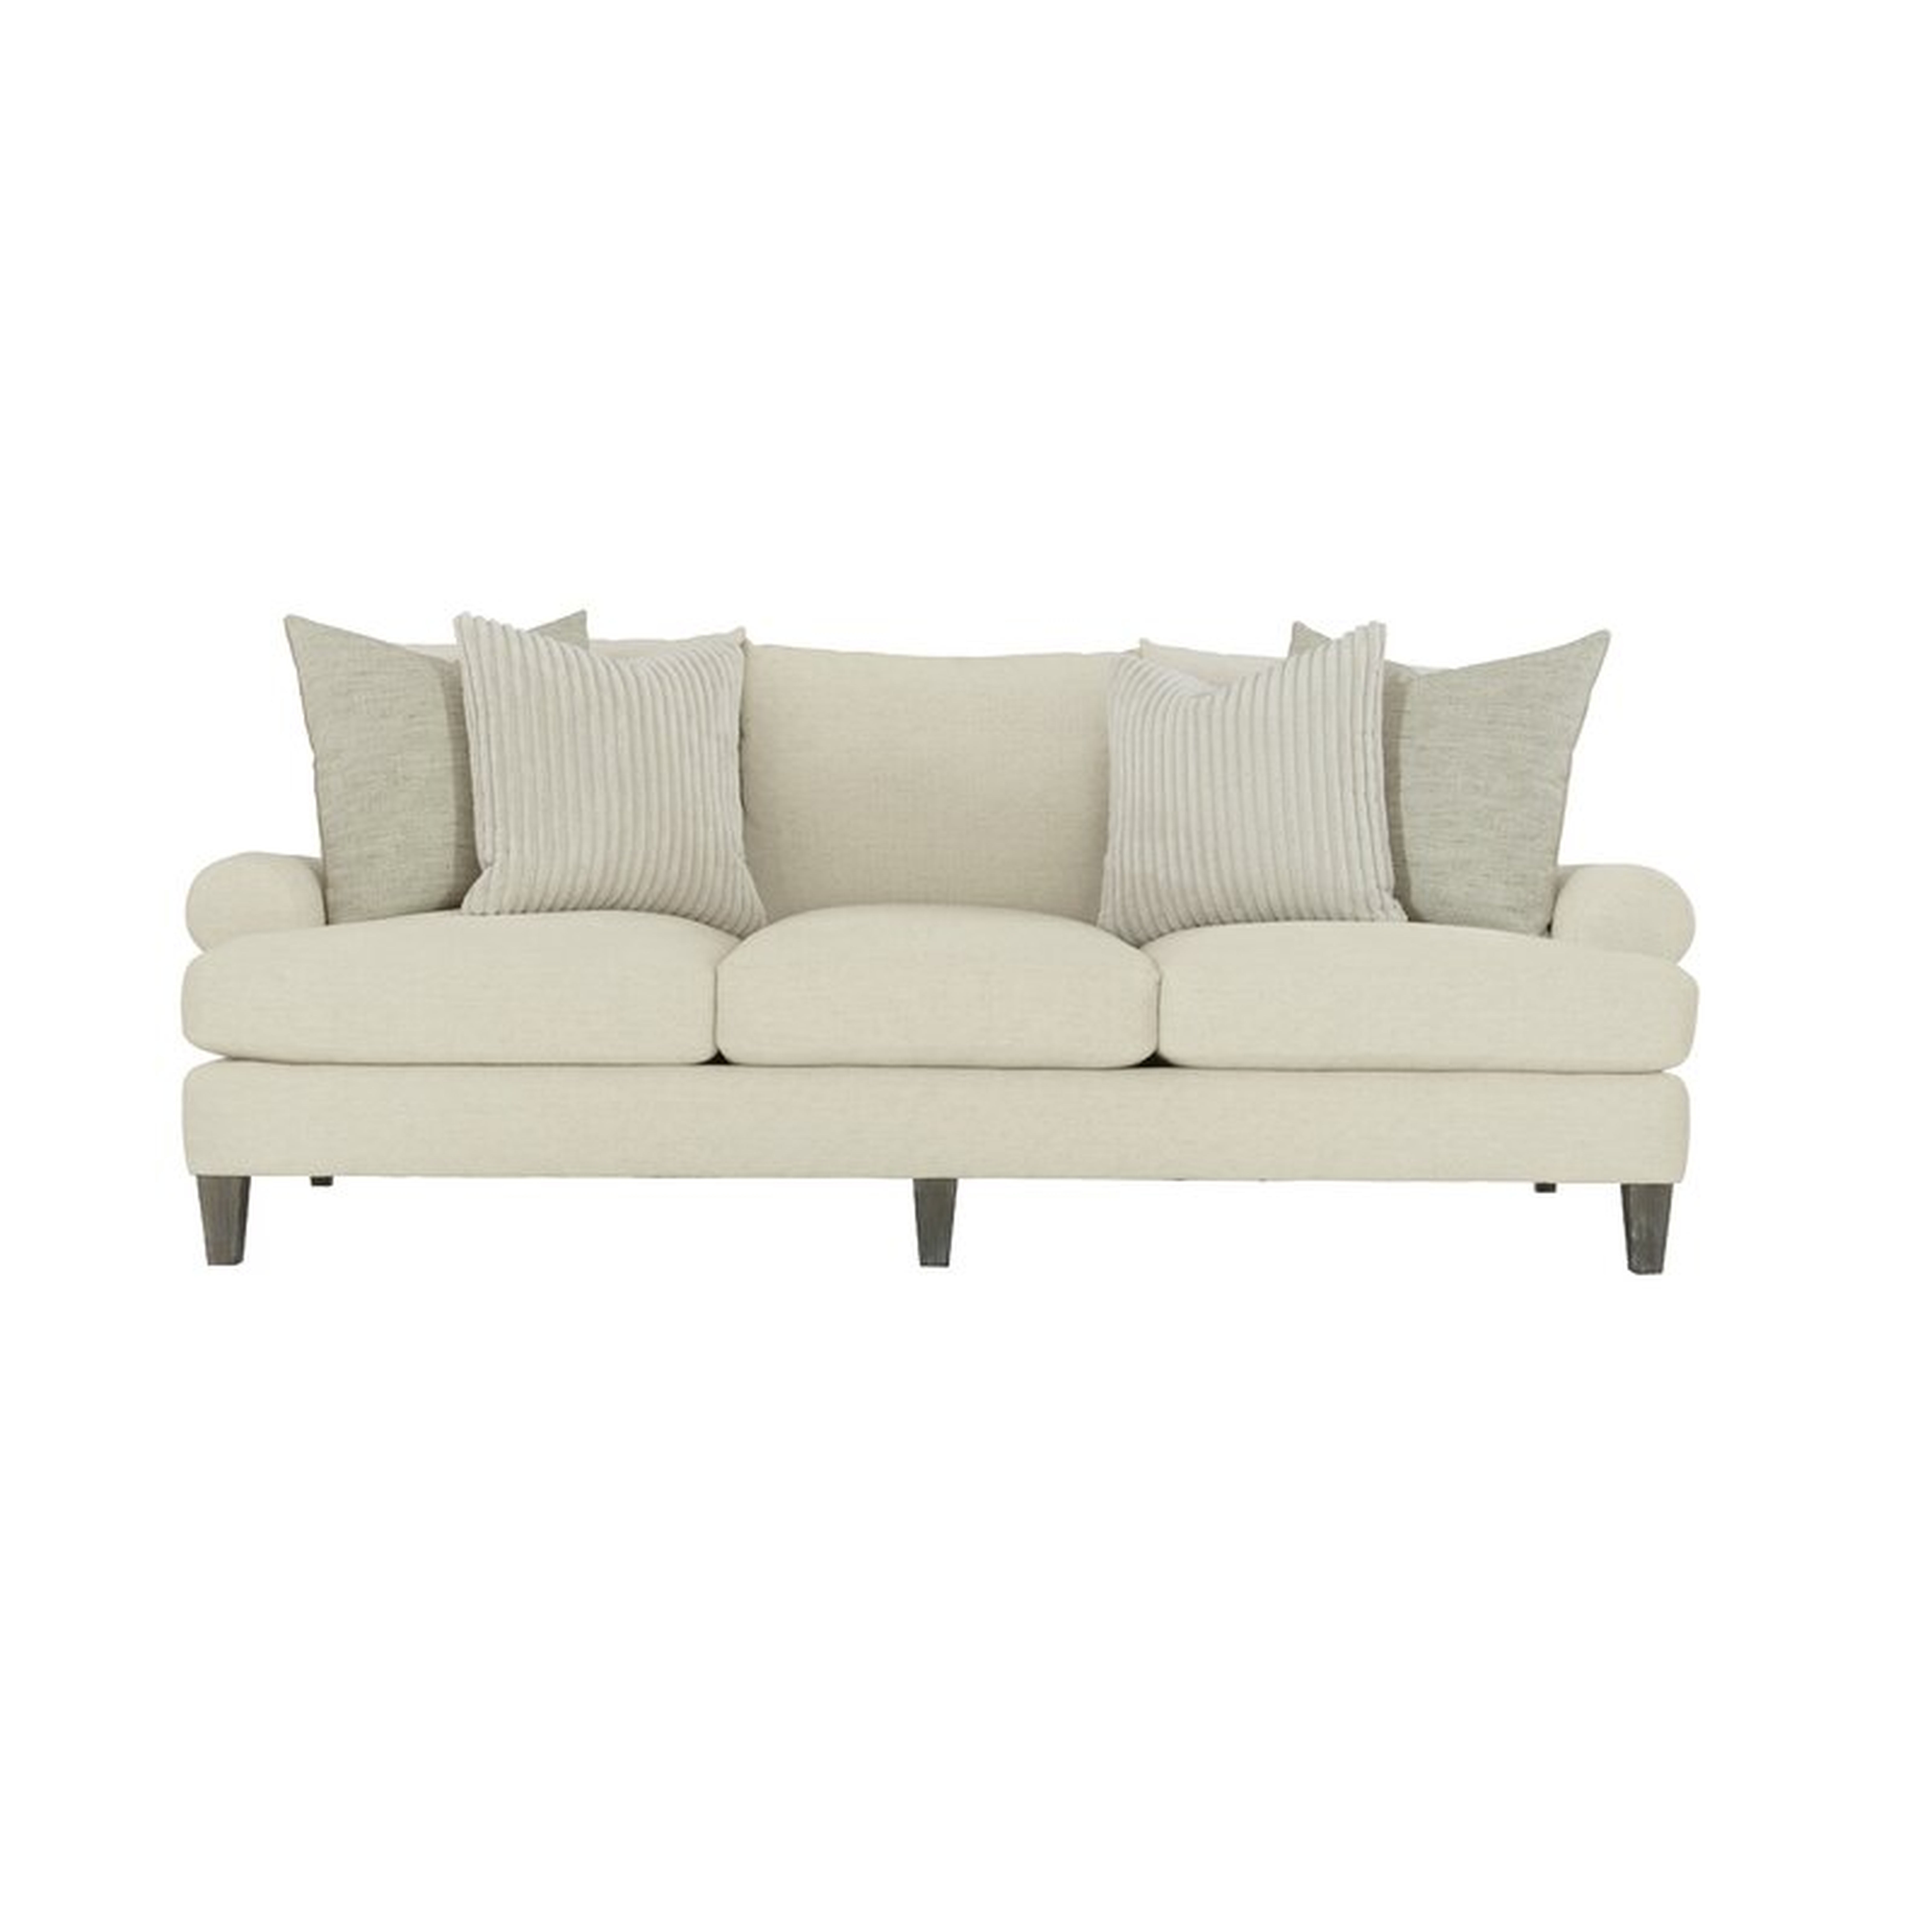 Bernhardt Isabella 94"" Sofa with Reversible Cushions - Perigold